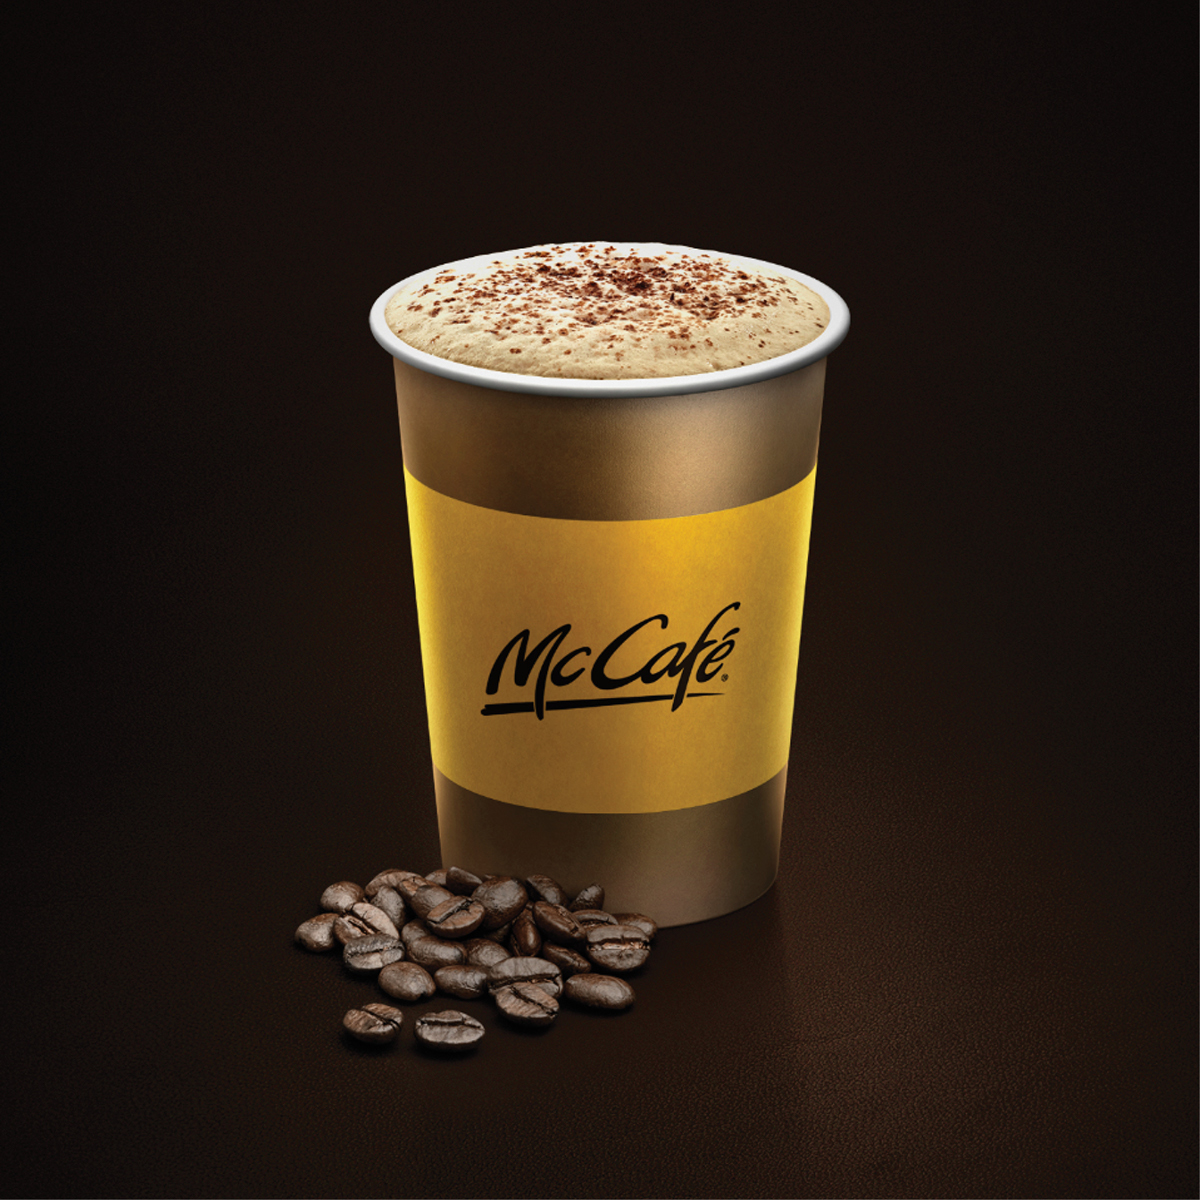 CGI cinema 4d McDonalds mccafe Coffee latte Mocha espresso drink dubai americano Leo Burnett modeling